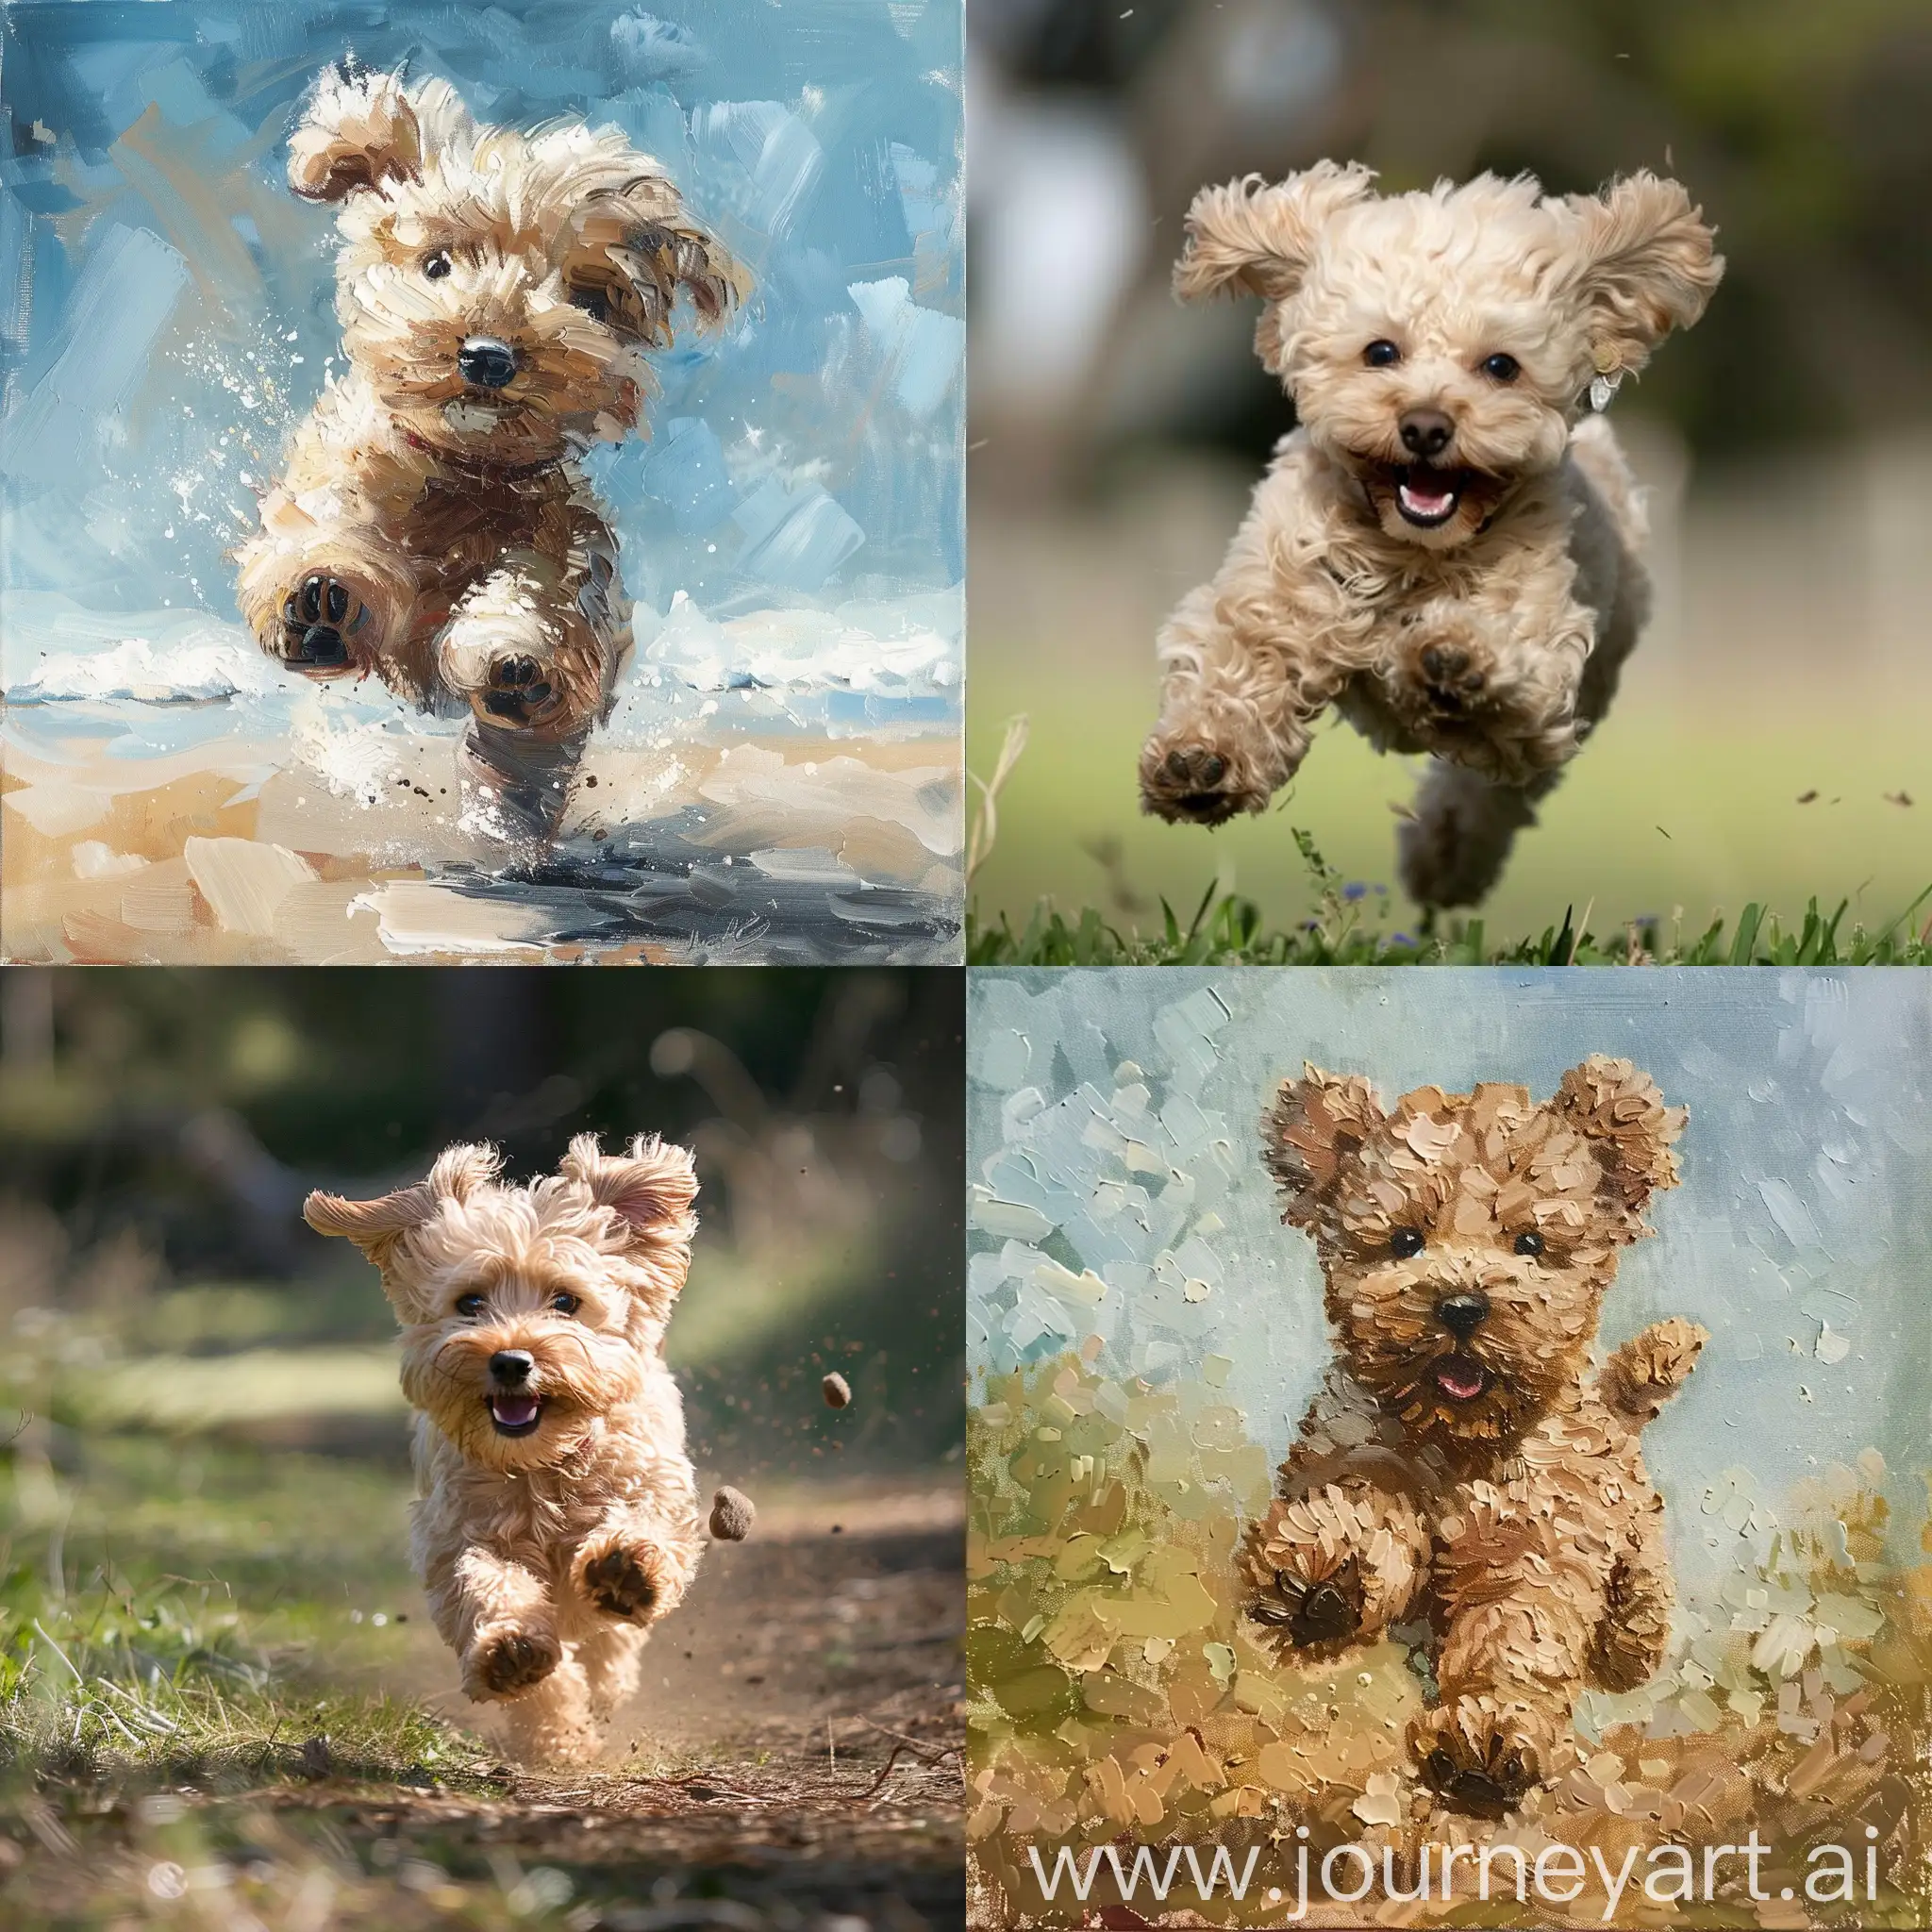 Playful-Teddy-Dog-Running-in-Vibrant-Environment